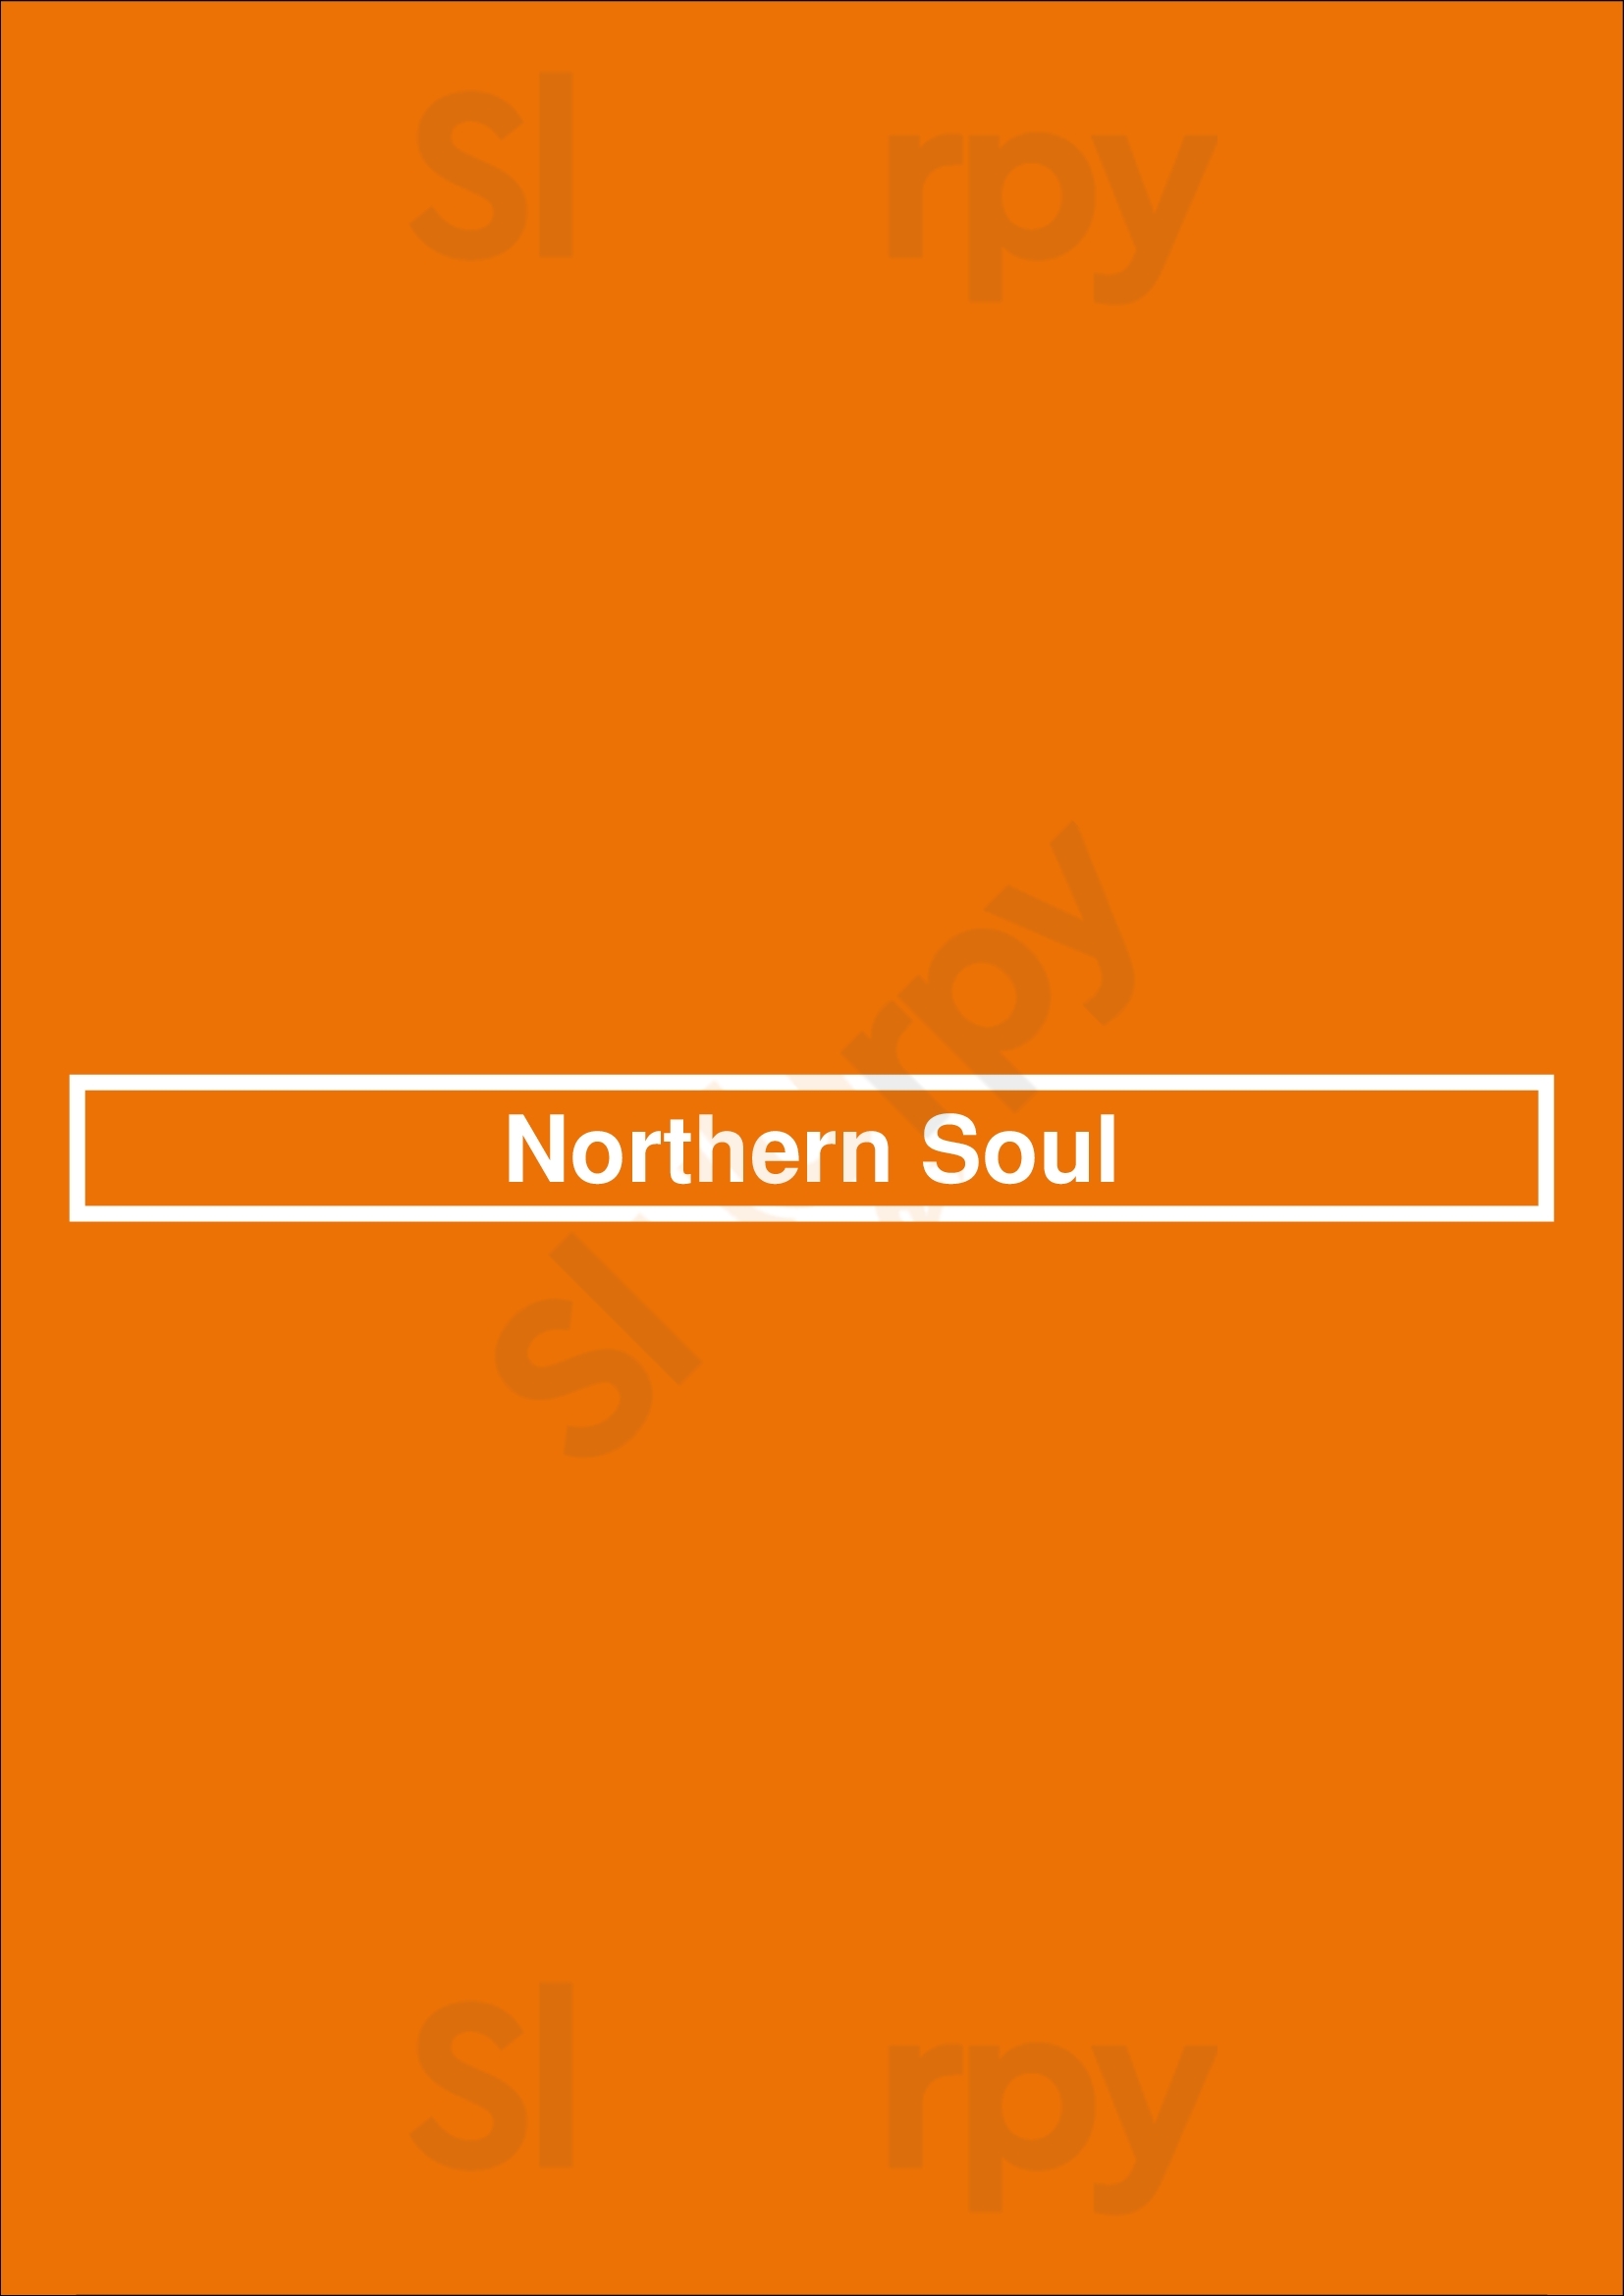 Northern Soul Manchester Menu - 1